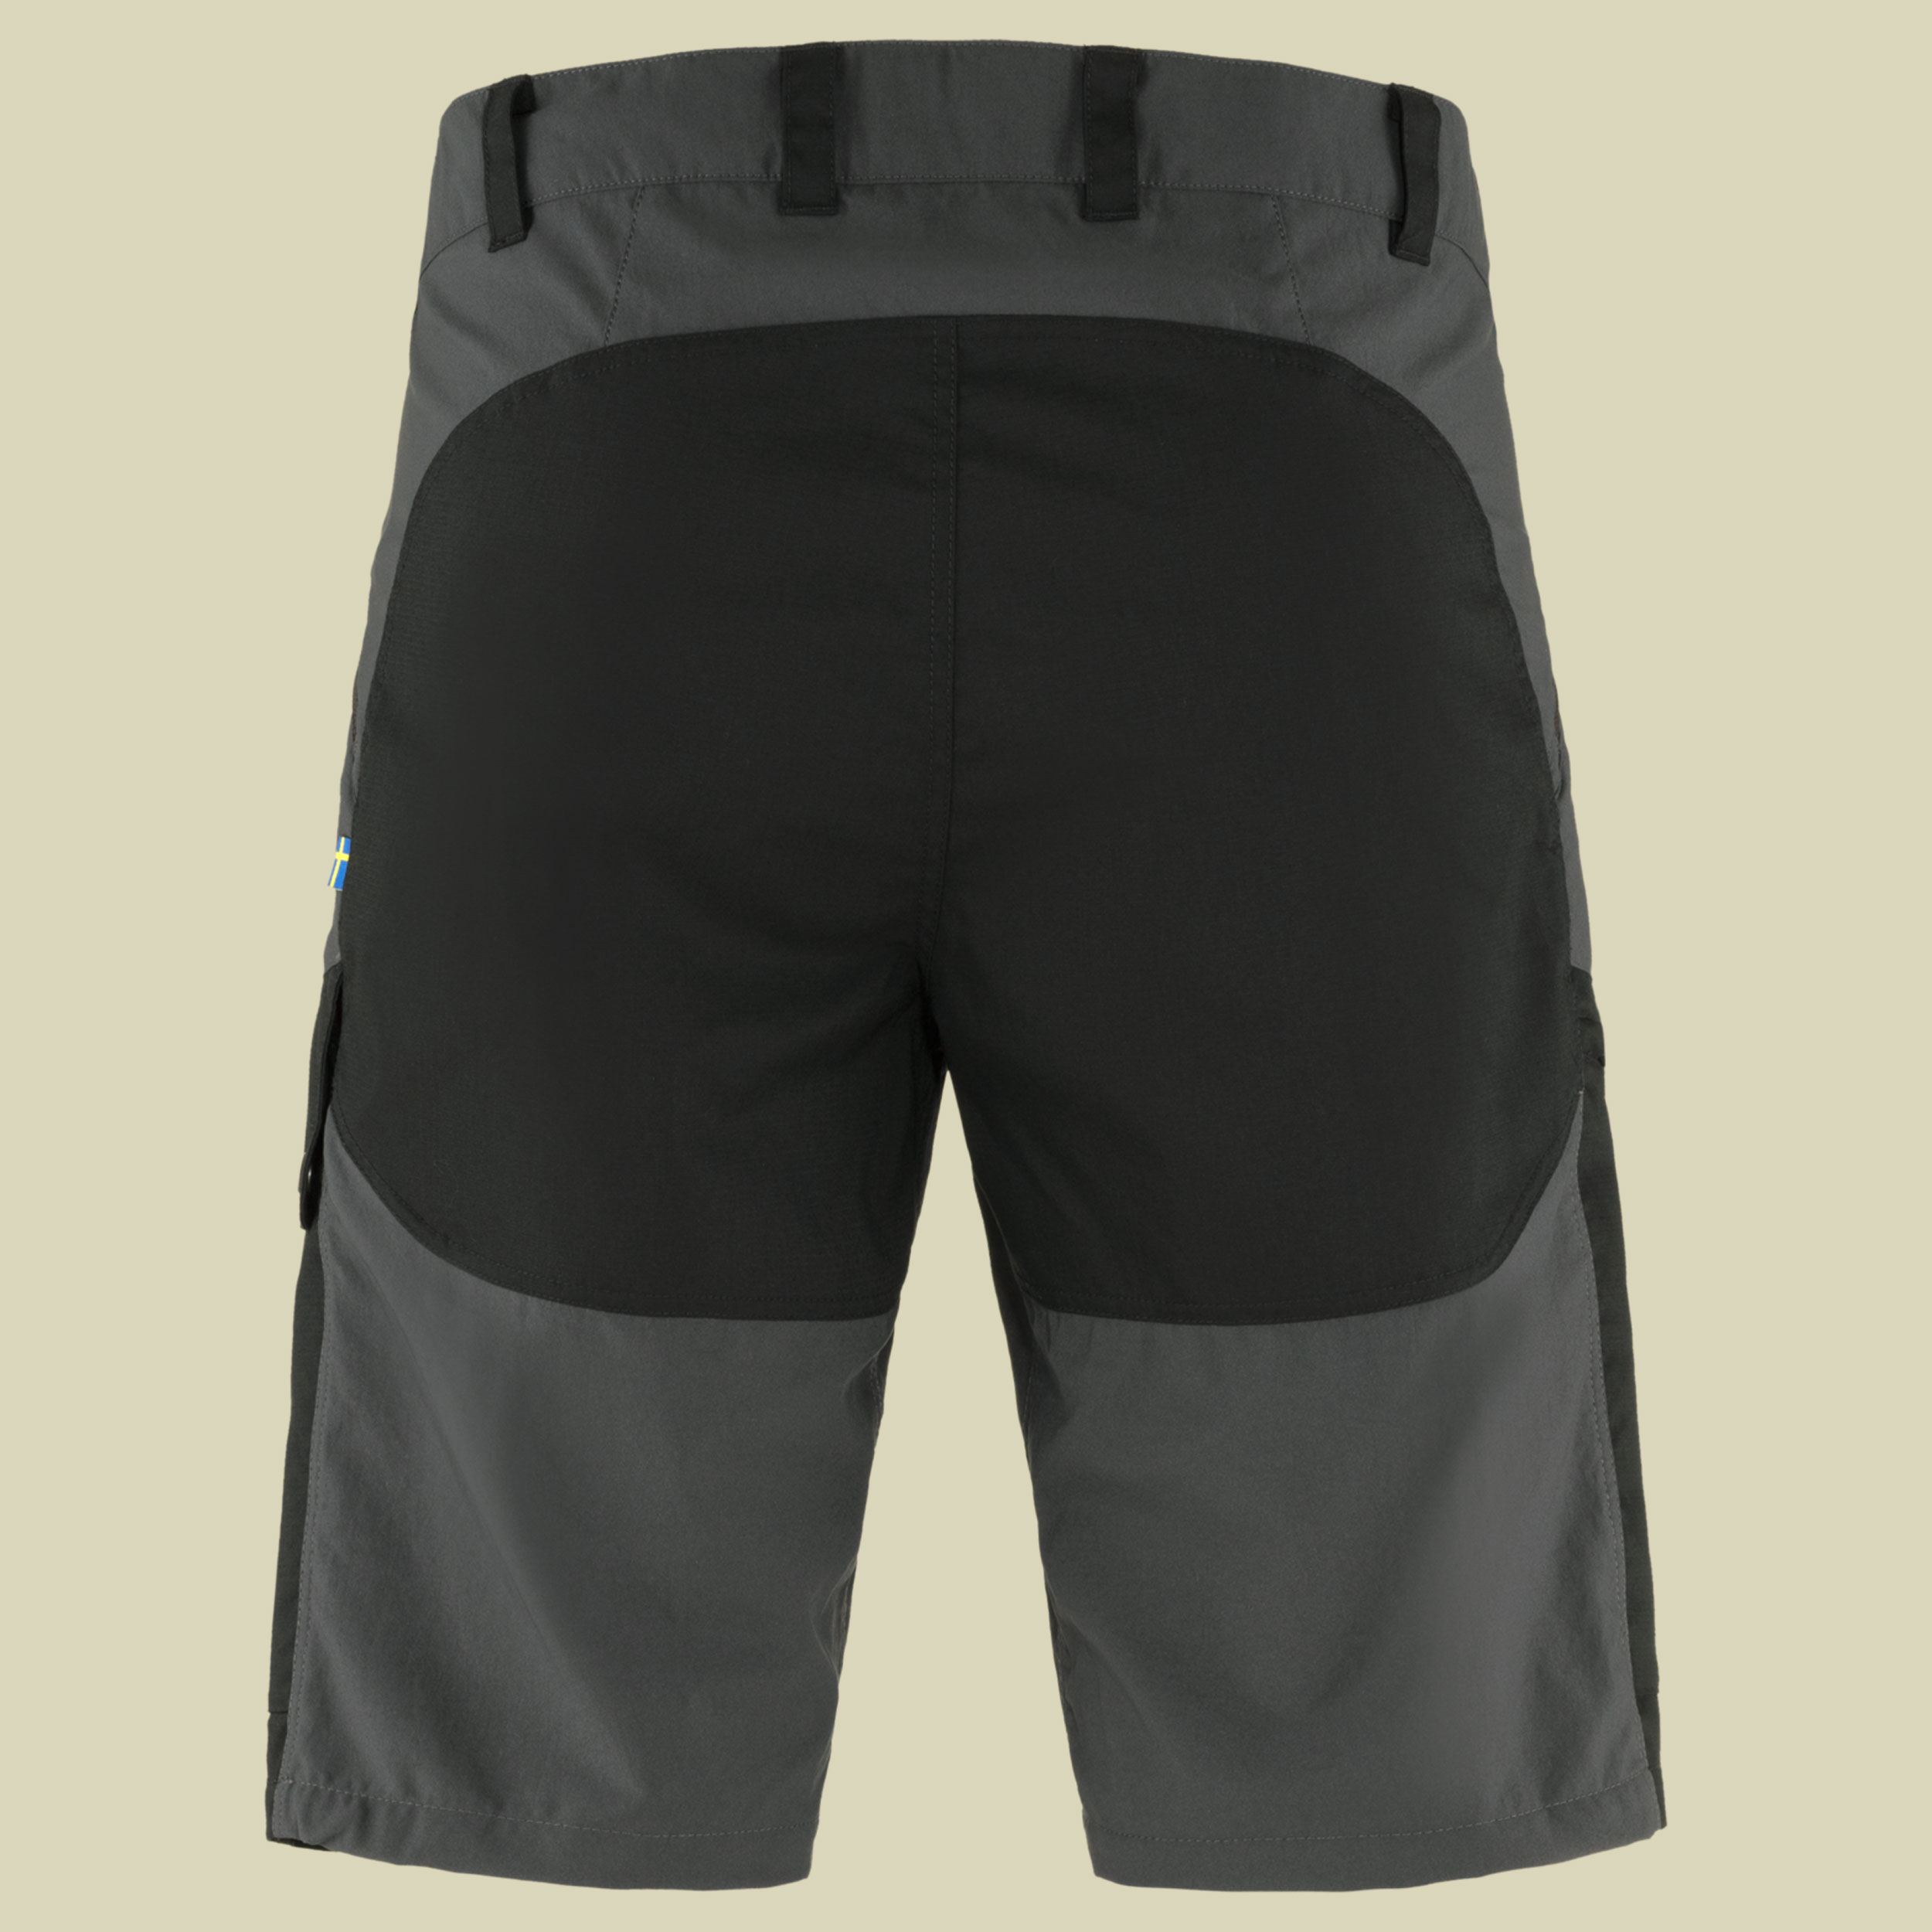 Abisko Midsummer Shorts Men Größe 54 Farbe dark grey/black